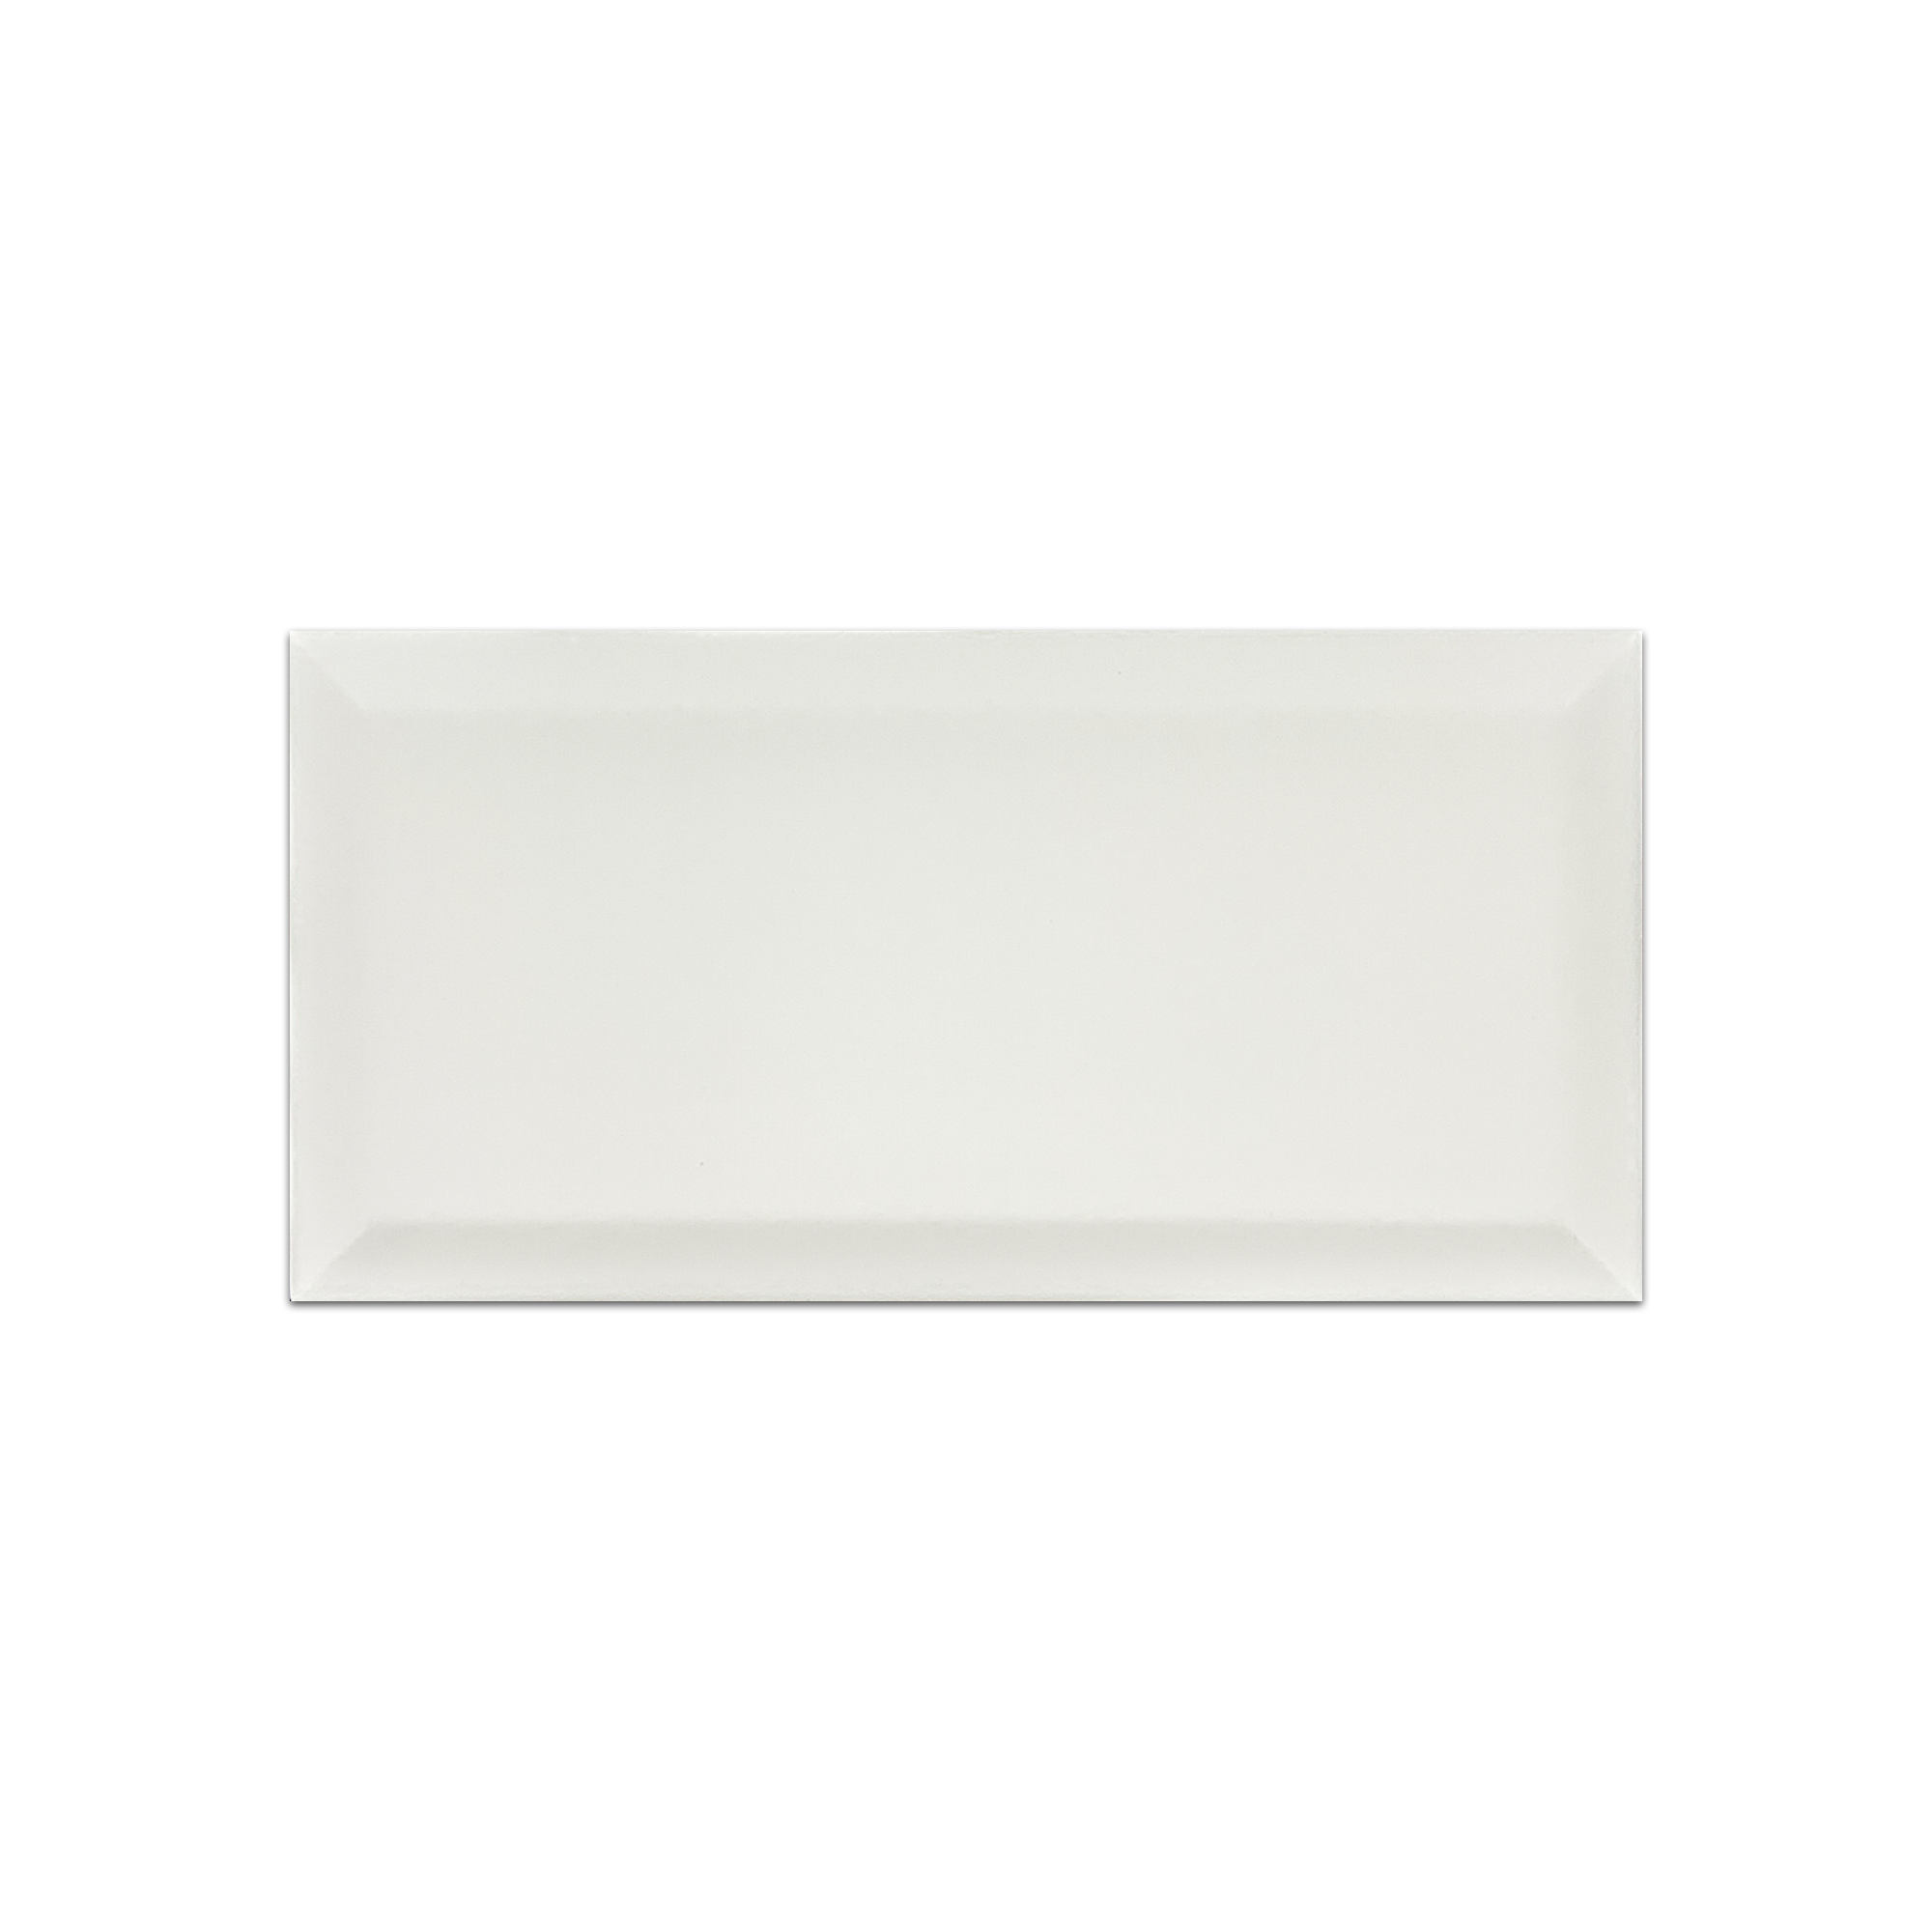 Elon Metropolitan Piccadilly White Porcelain Rectangle Wall Tile 4x8x0.375 Matte CS105 Surface Group International Product